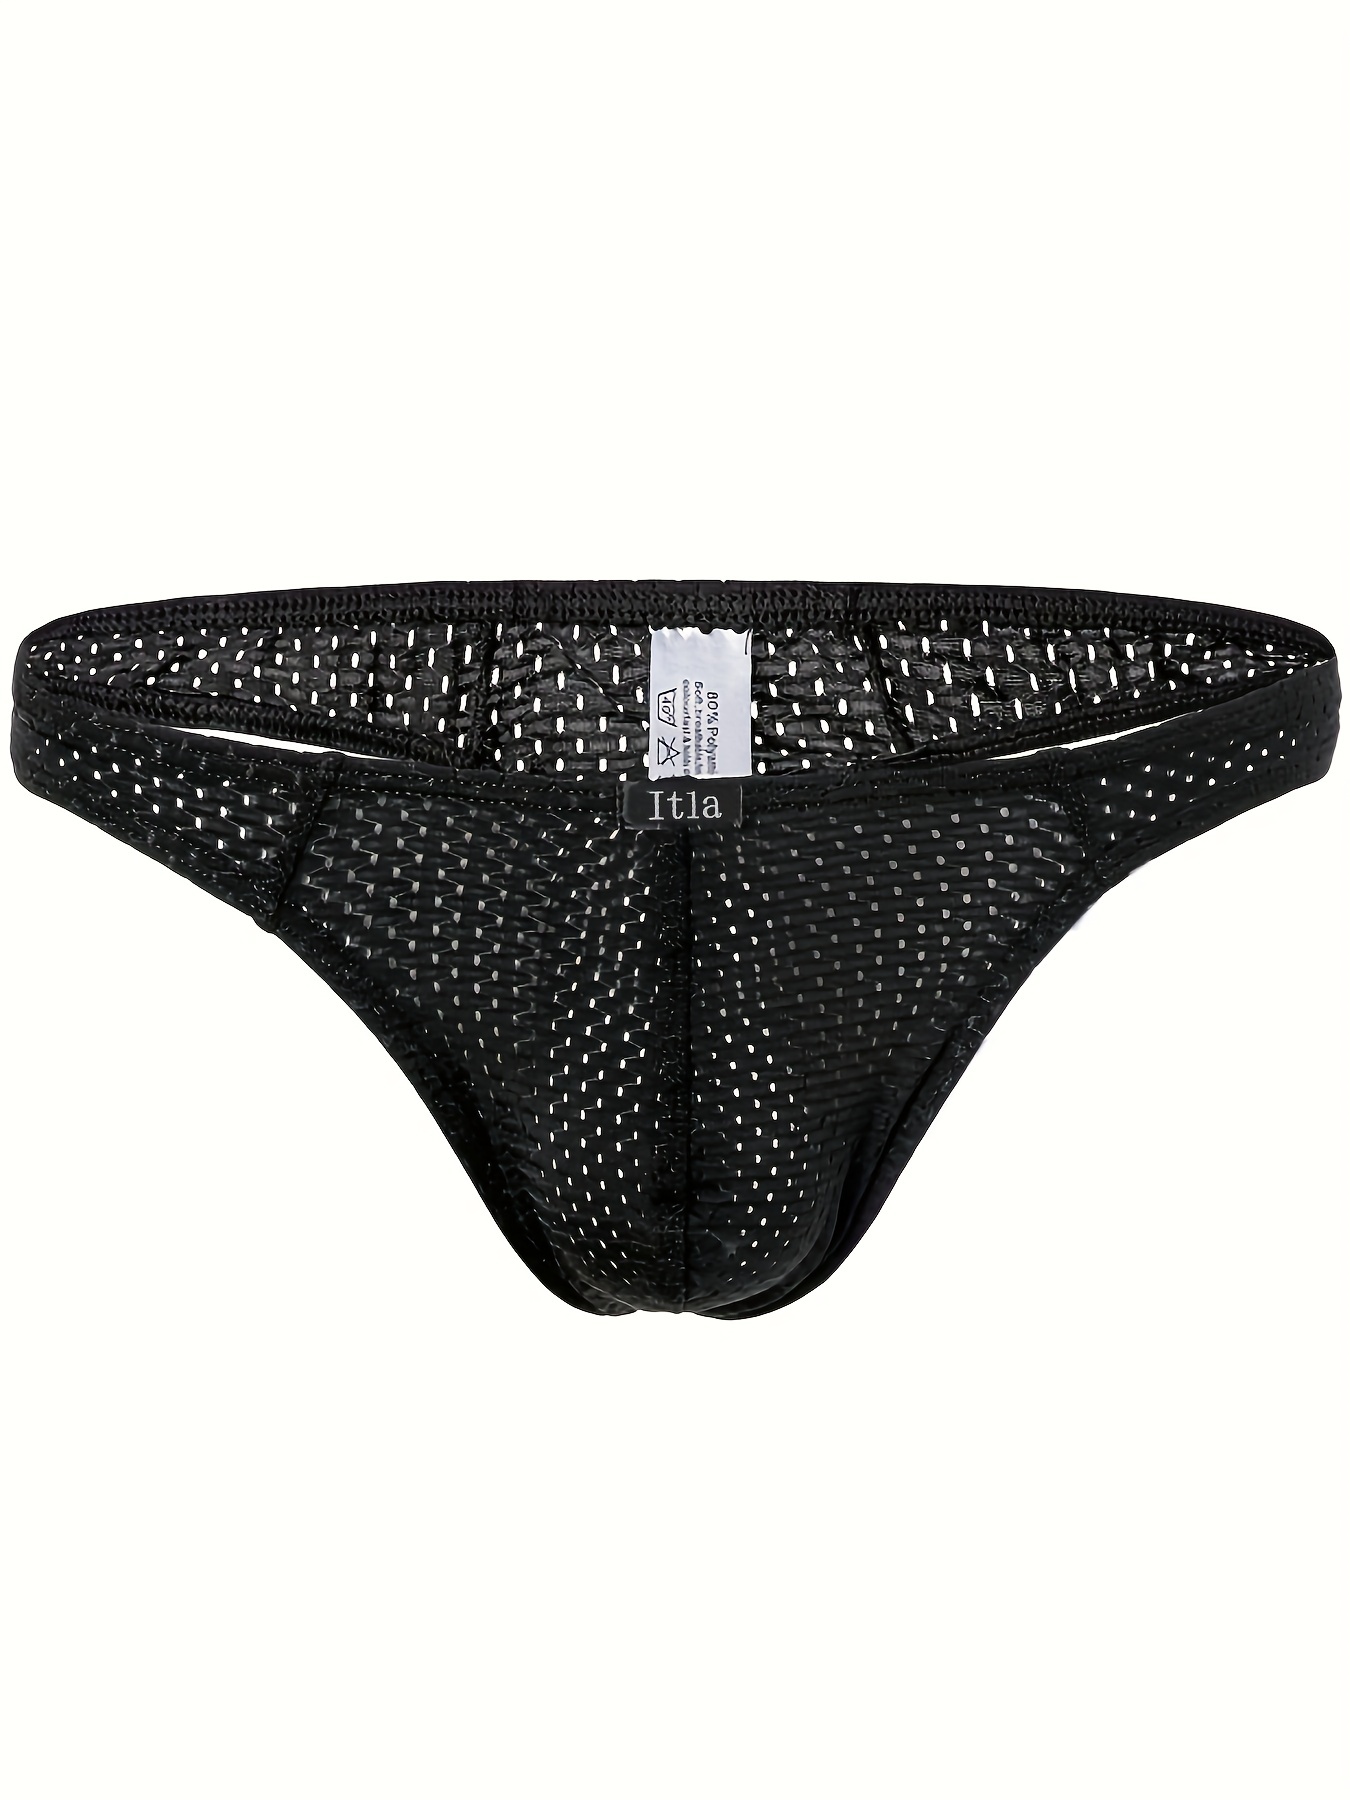 Men's Sexy Underwear Elephant T-back G-string Briefs Breathable Thong  Underpants Lingerie Men's Panties Black Red Leopard - G-strings & Thongs -  AliExpress